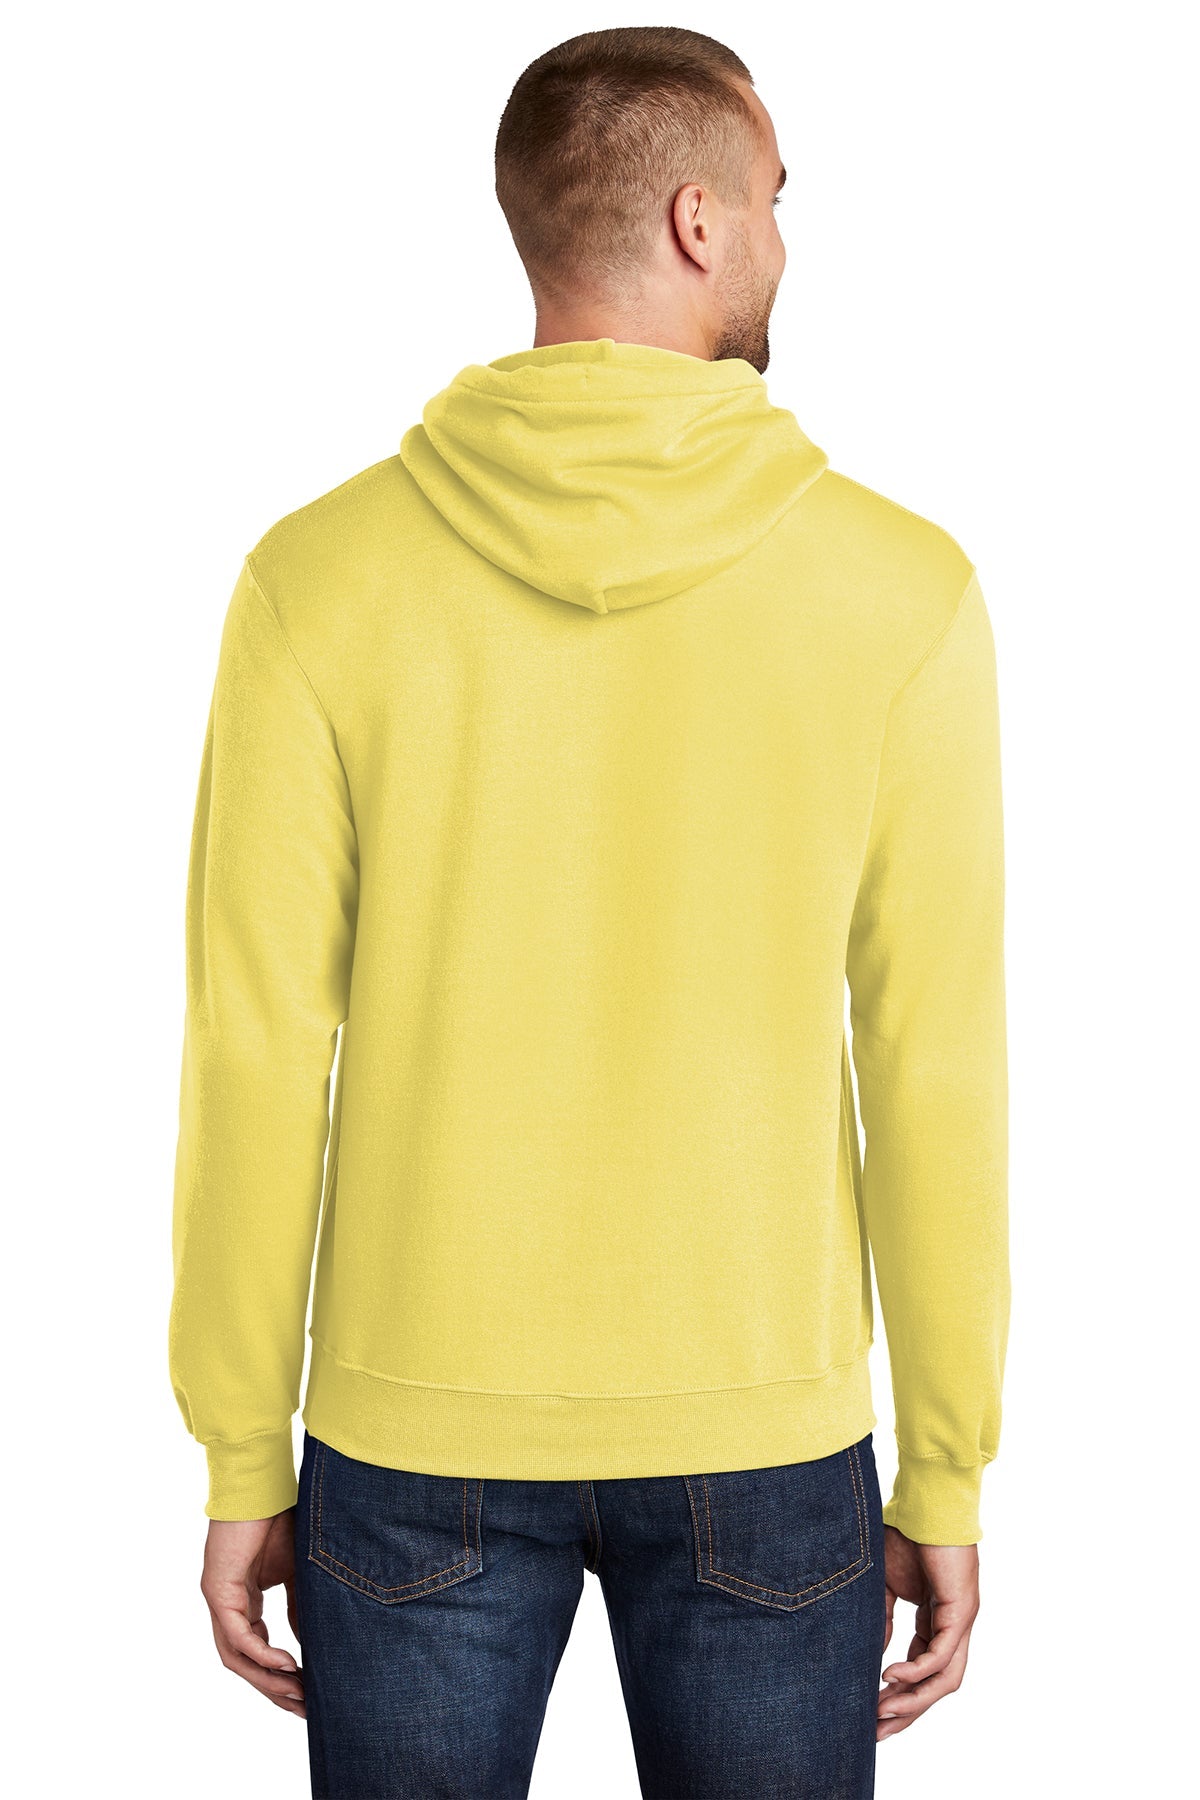 port & company_pc78h _yellow_company_logo_sweatshirts